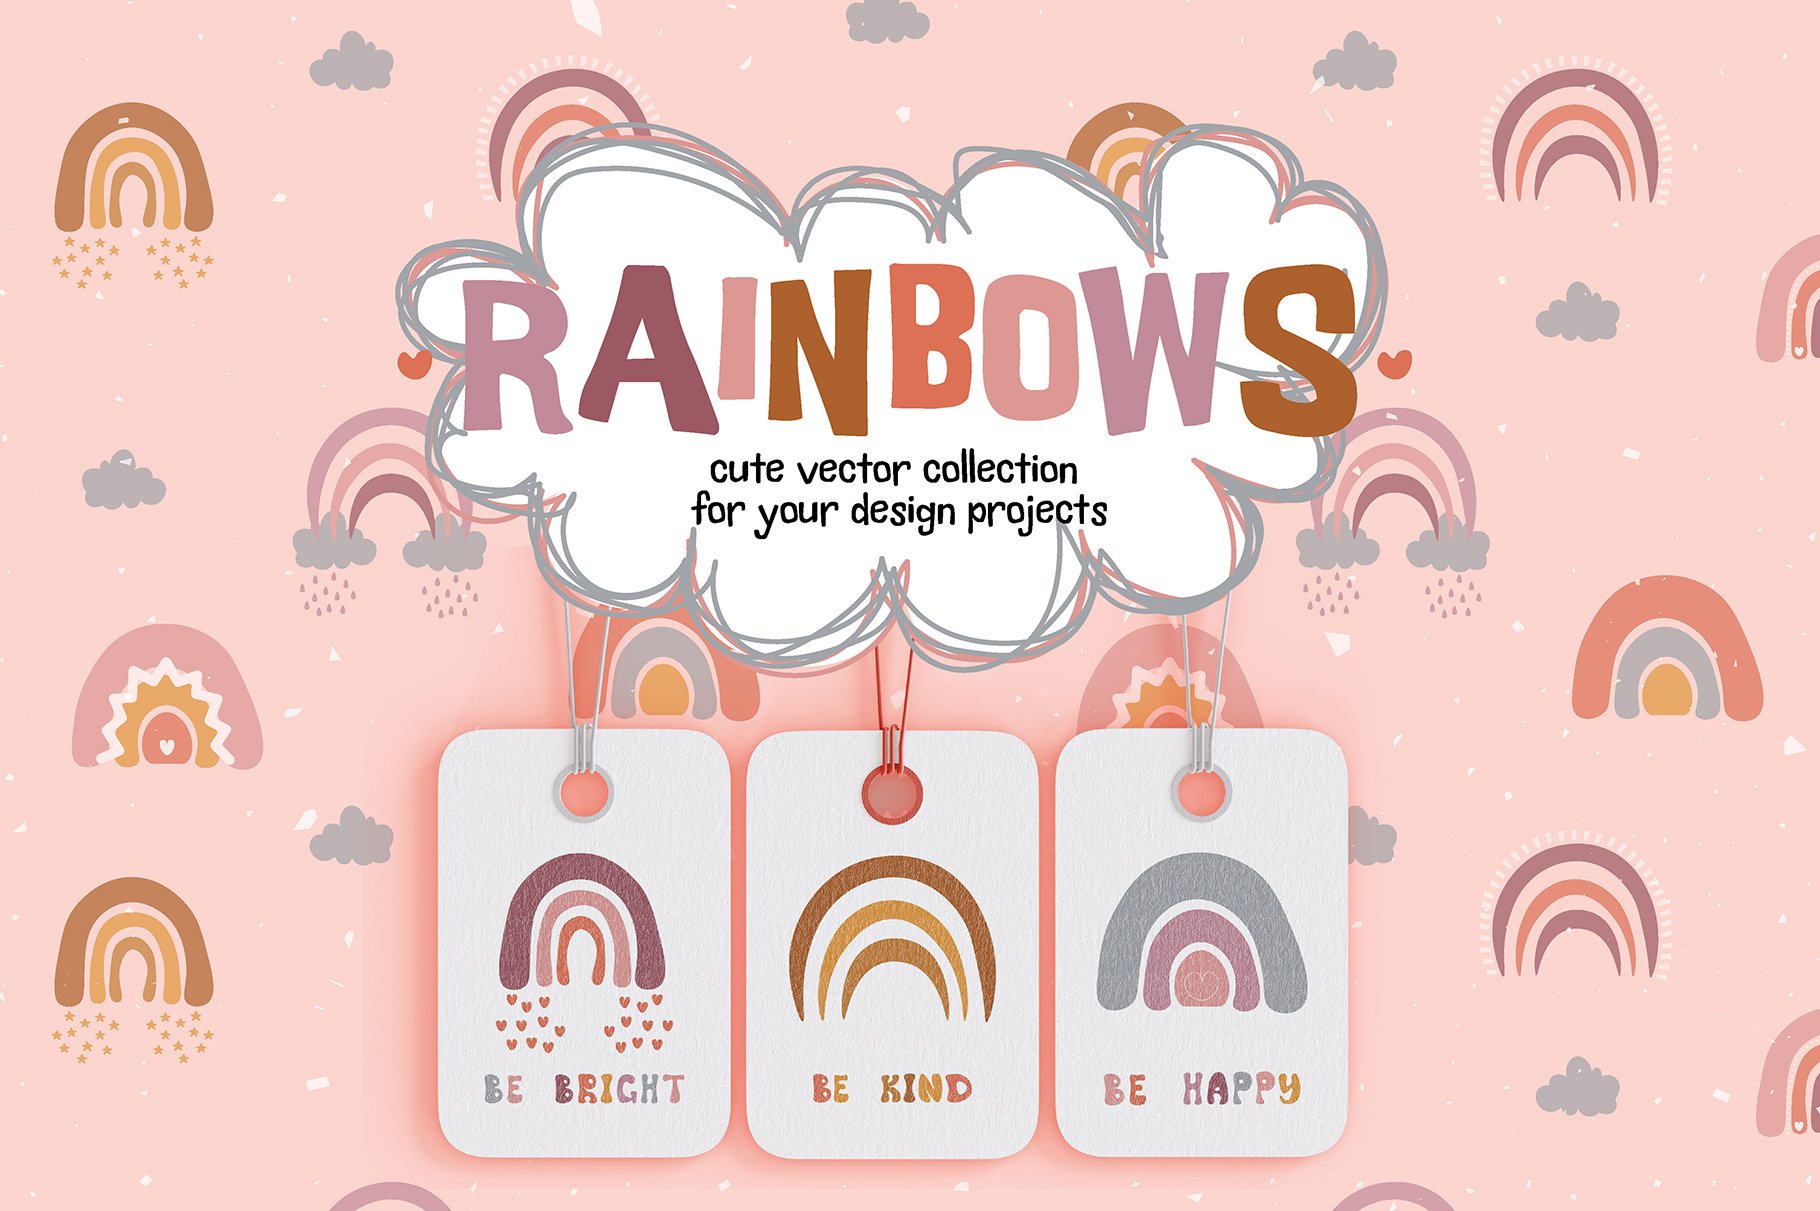 Rainbows cover image.